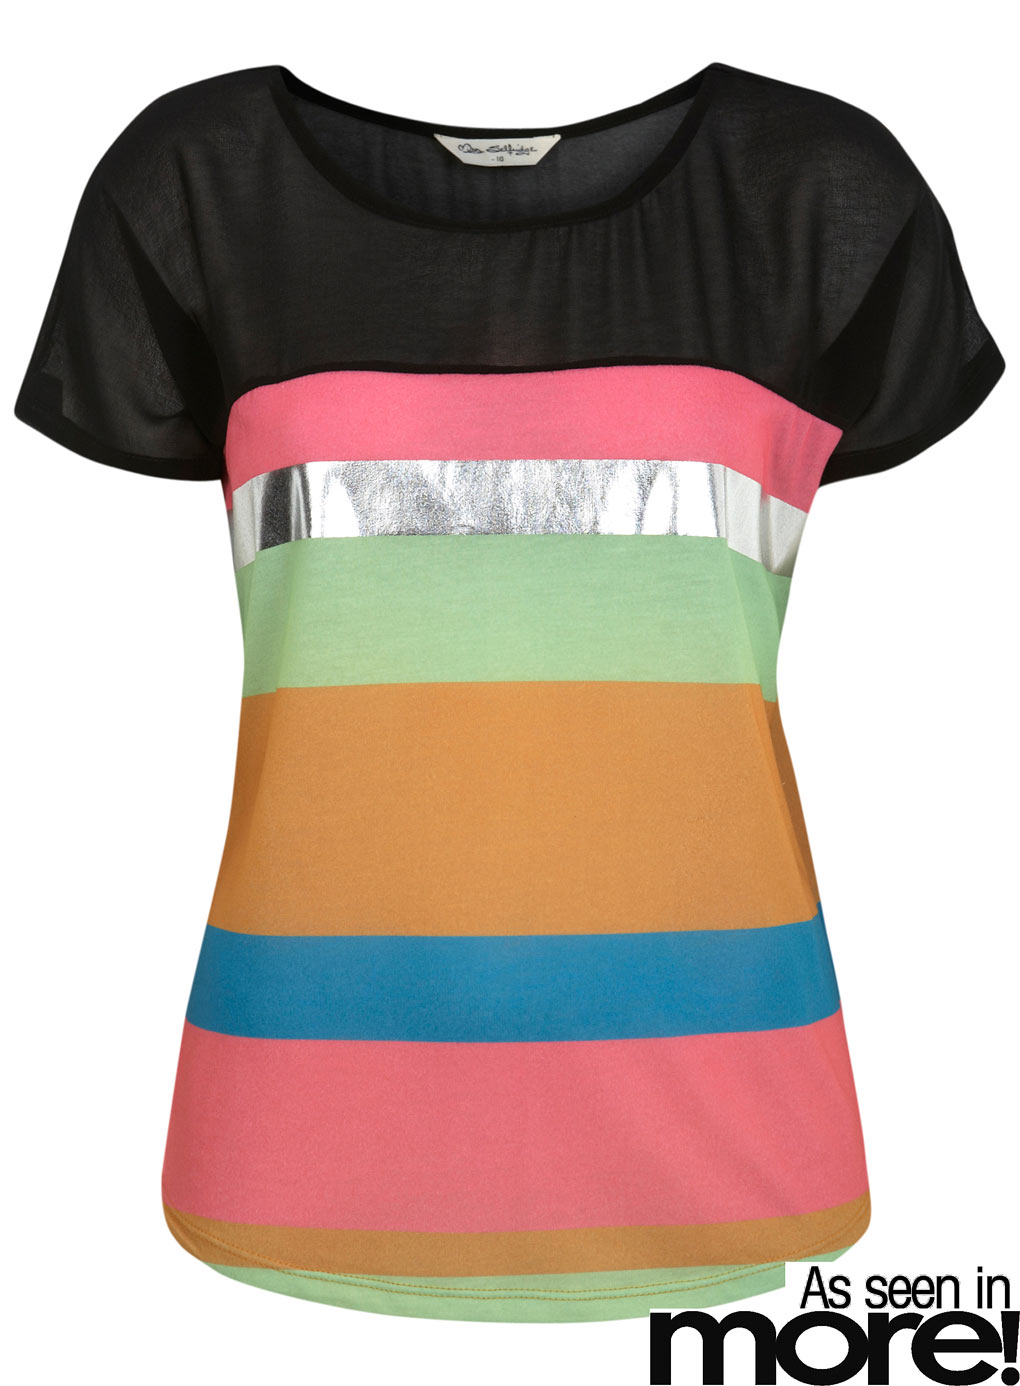 WobiSobi: Color Blocked, Tie Dye T-Shirt.